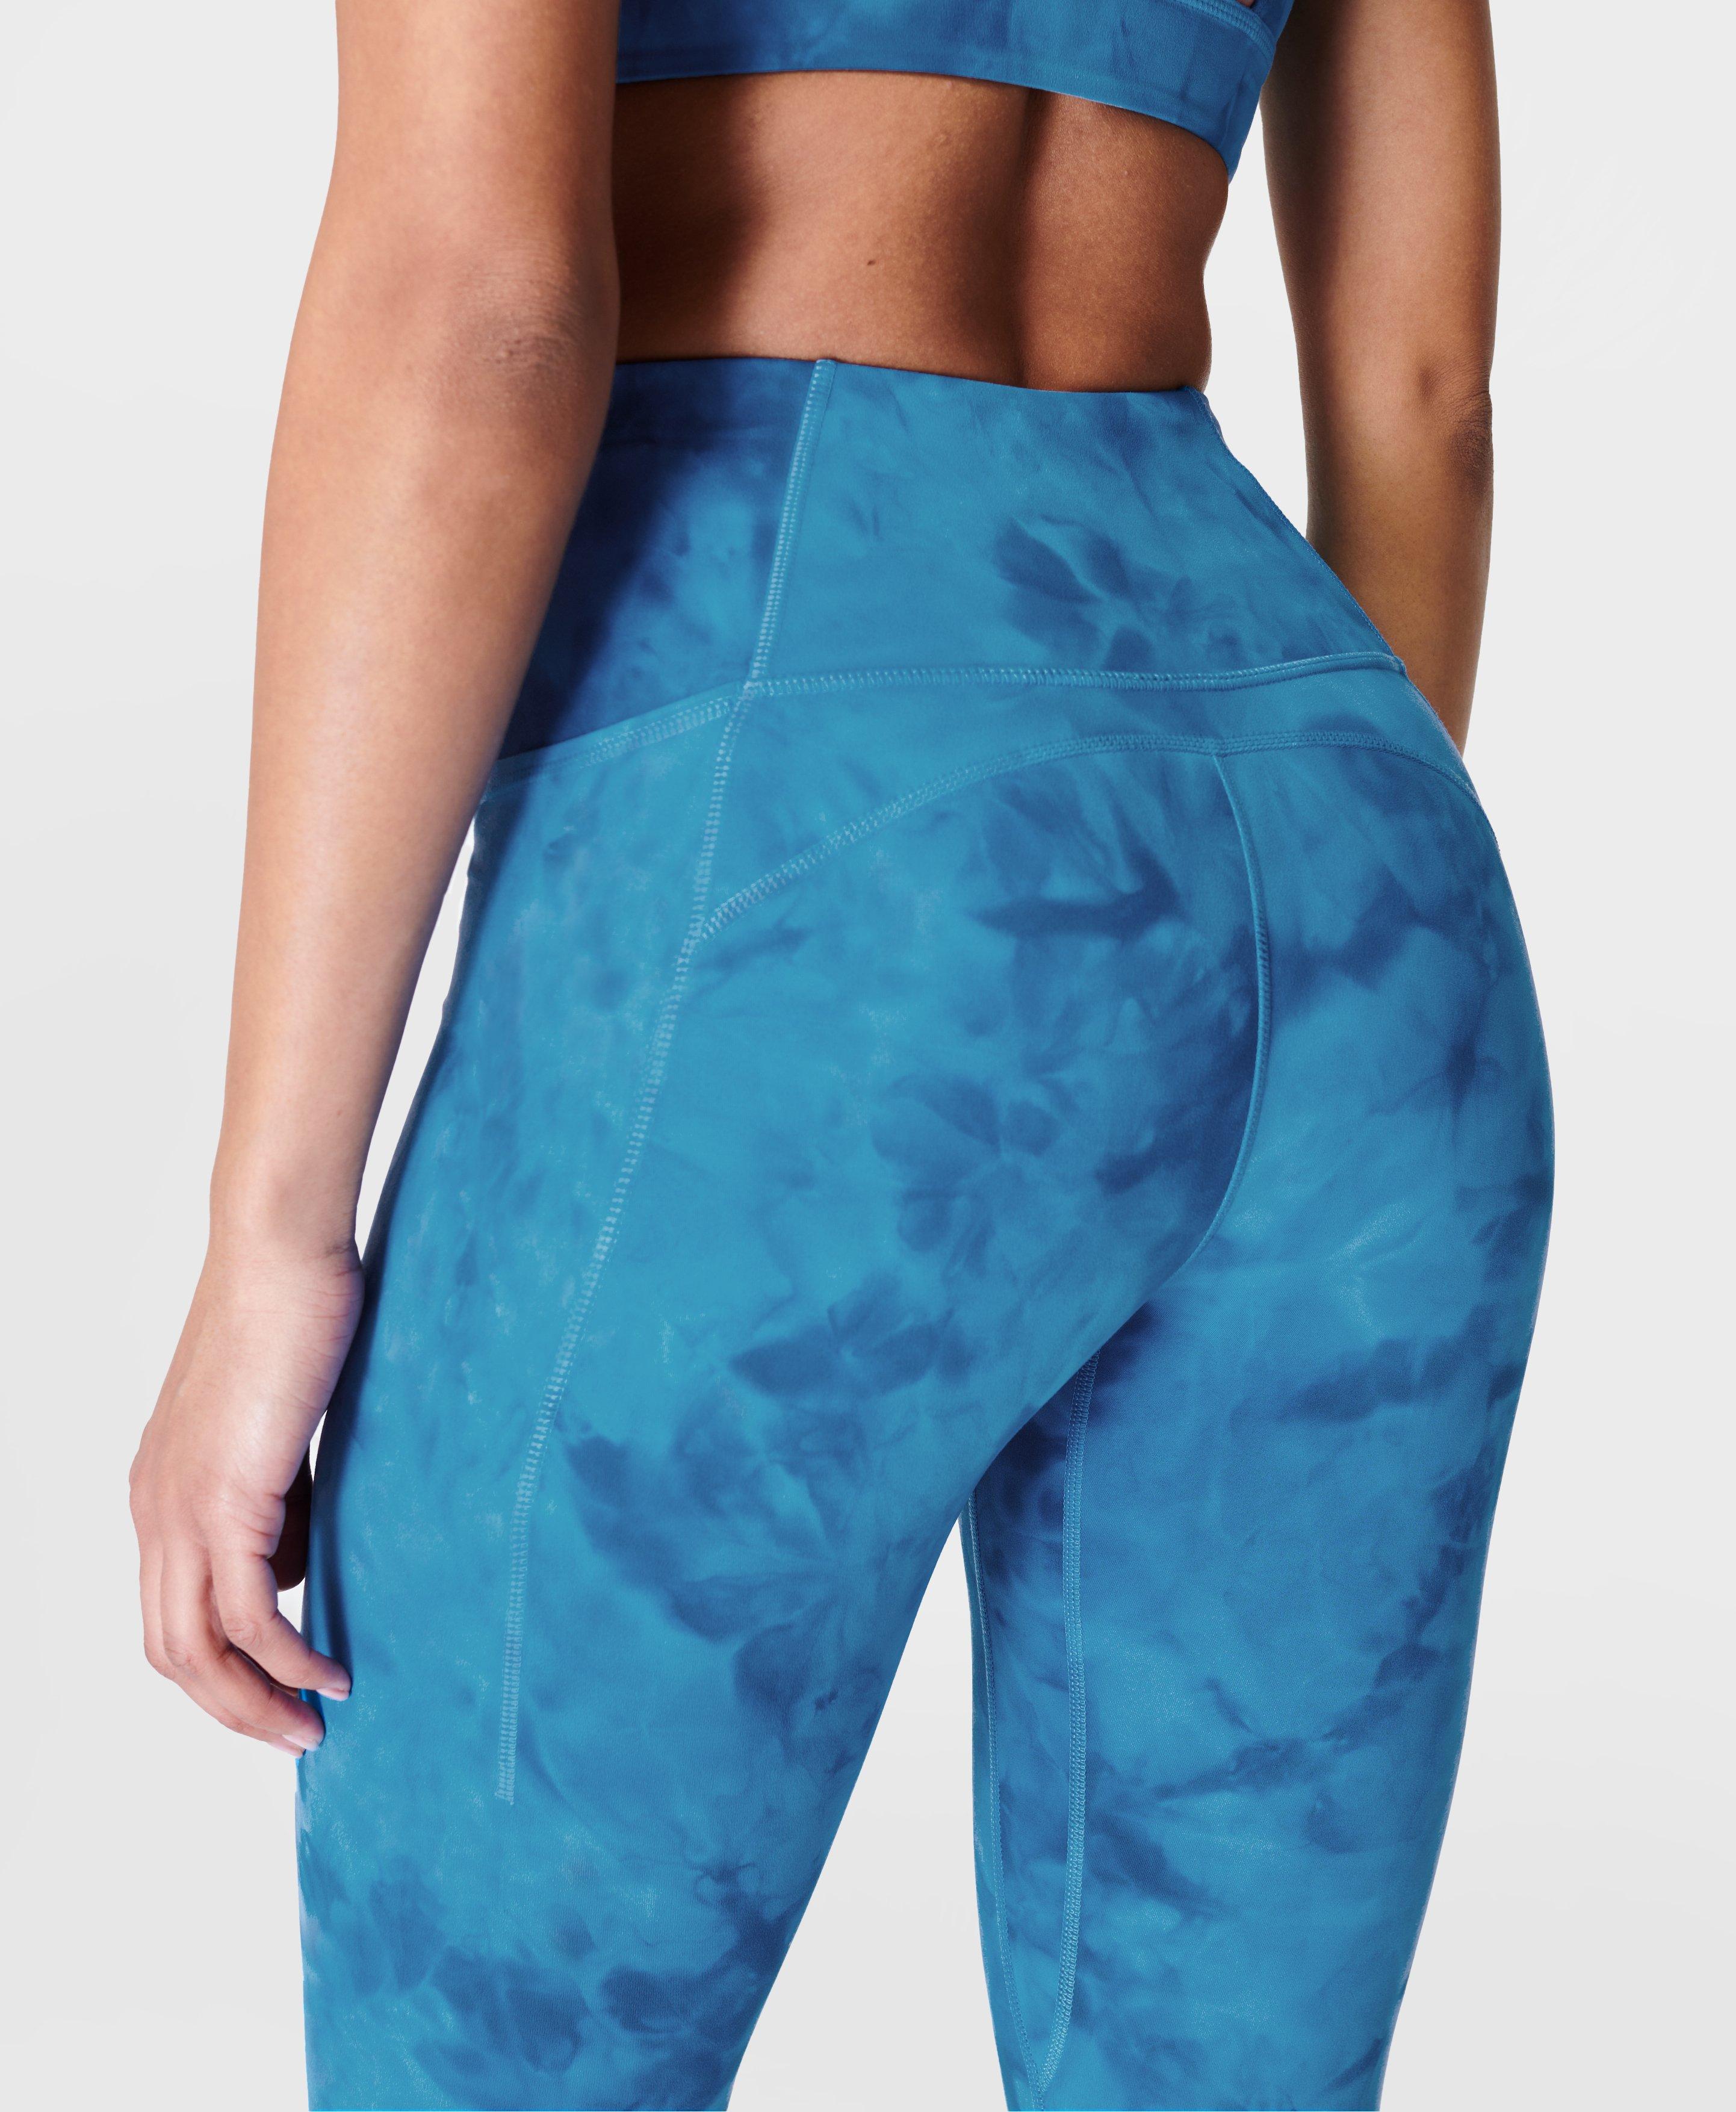 Super Soft 7/8 Yoga Leggings - Blue Spray Dye Print